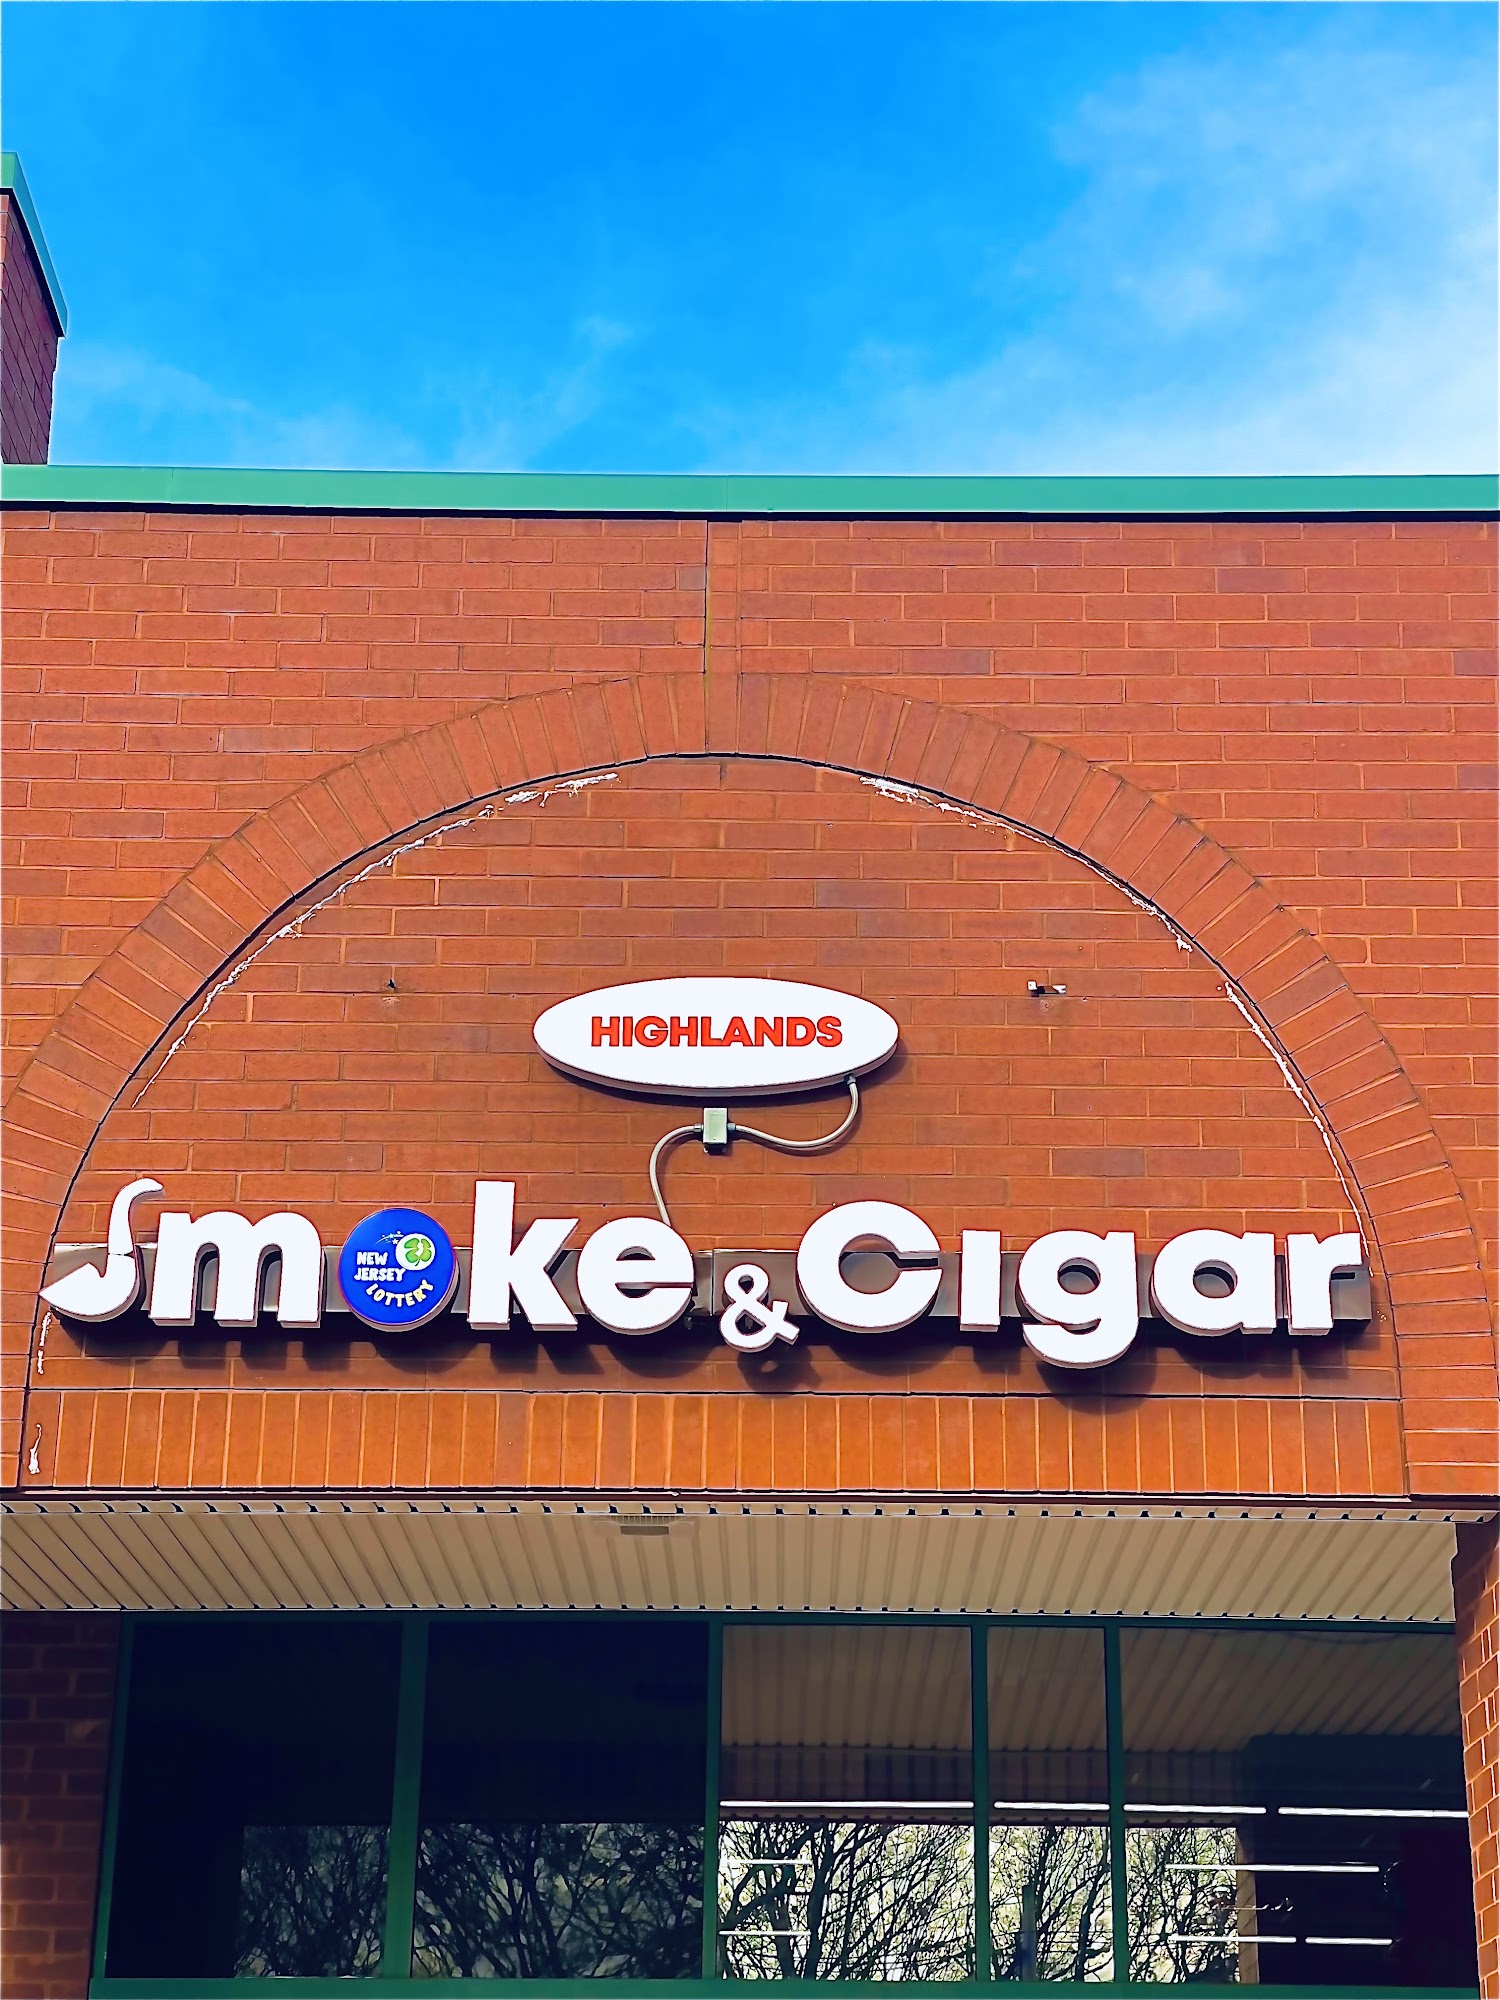 Highlands Smoke & Cigar